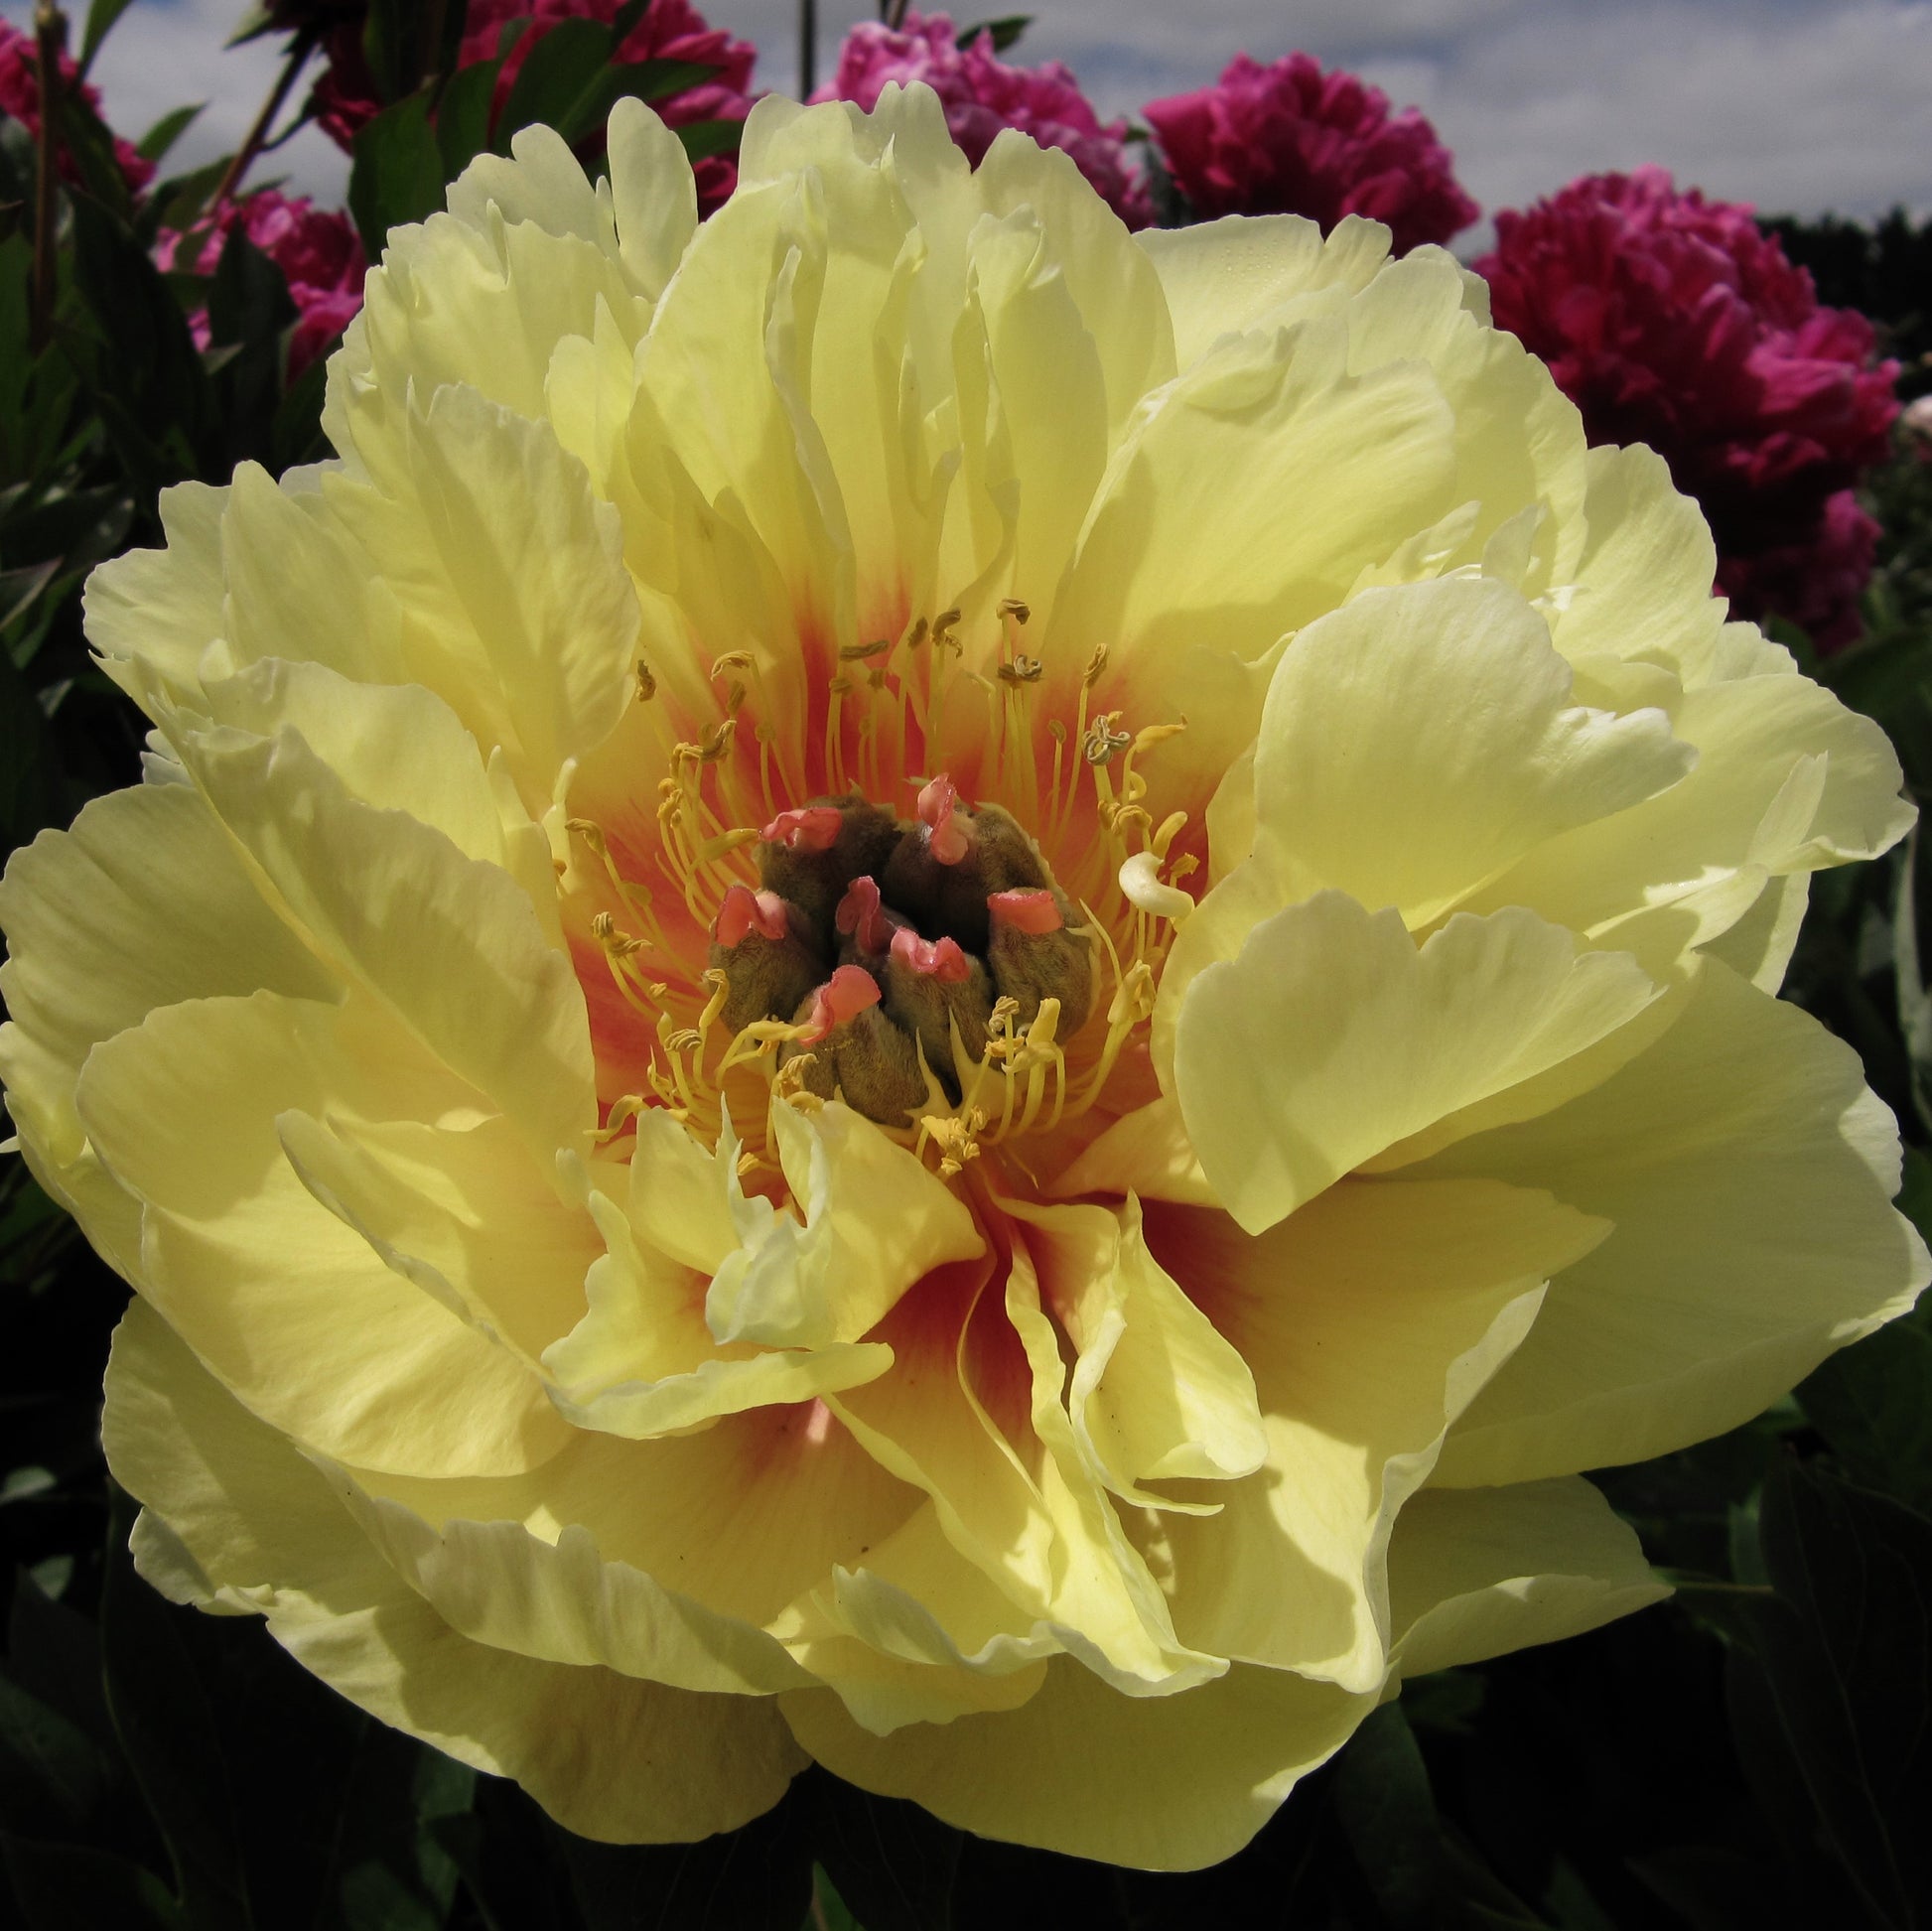 Garden Treasure belongs to the lactiflora group of vibrant yellow peonies